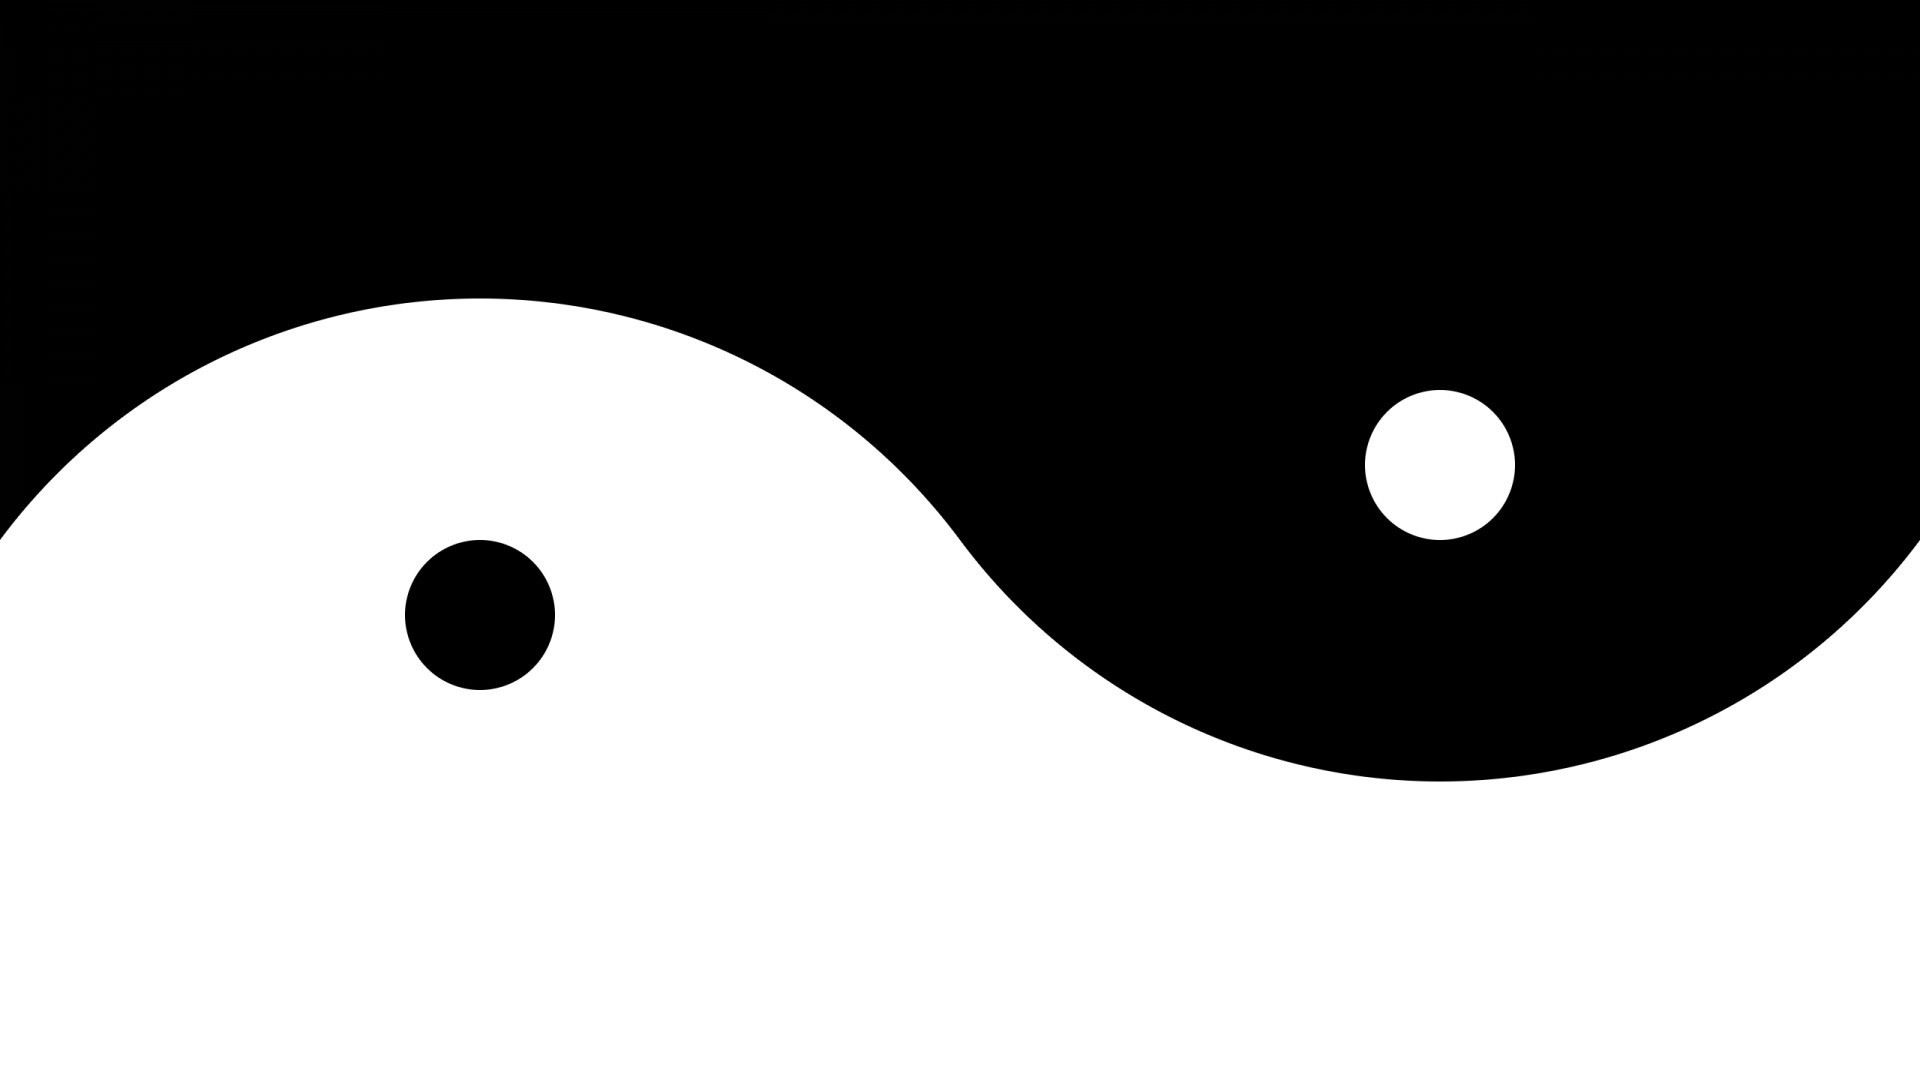 religious, yin & yang, black & white, minimalist